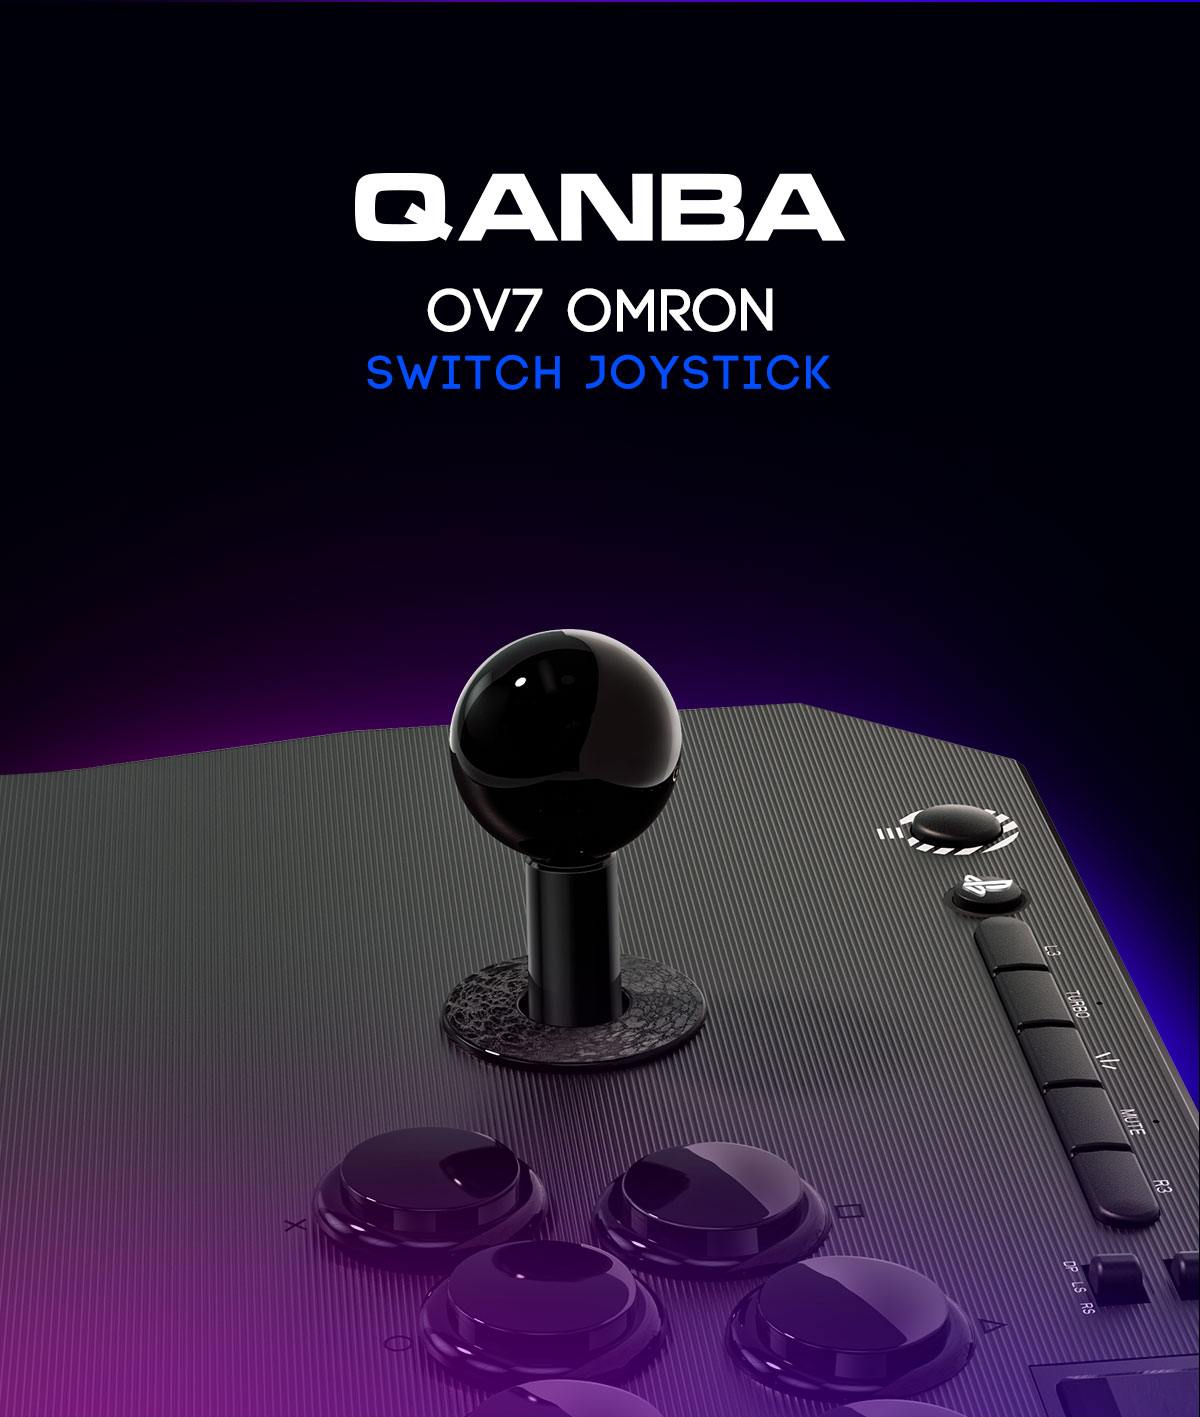 QANBA Drone 2 Arcade Stick PS4/5/PC